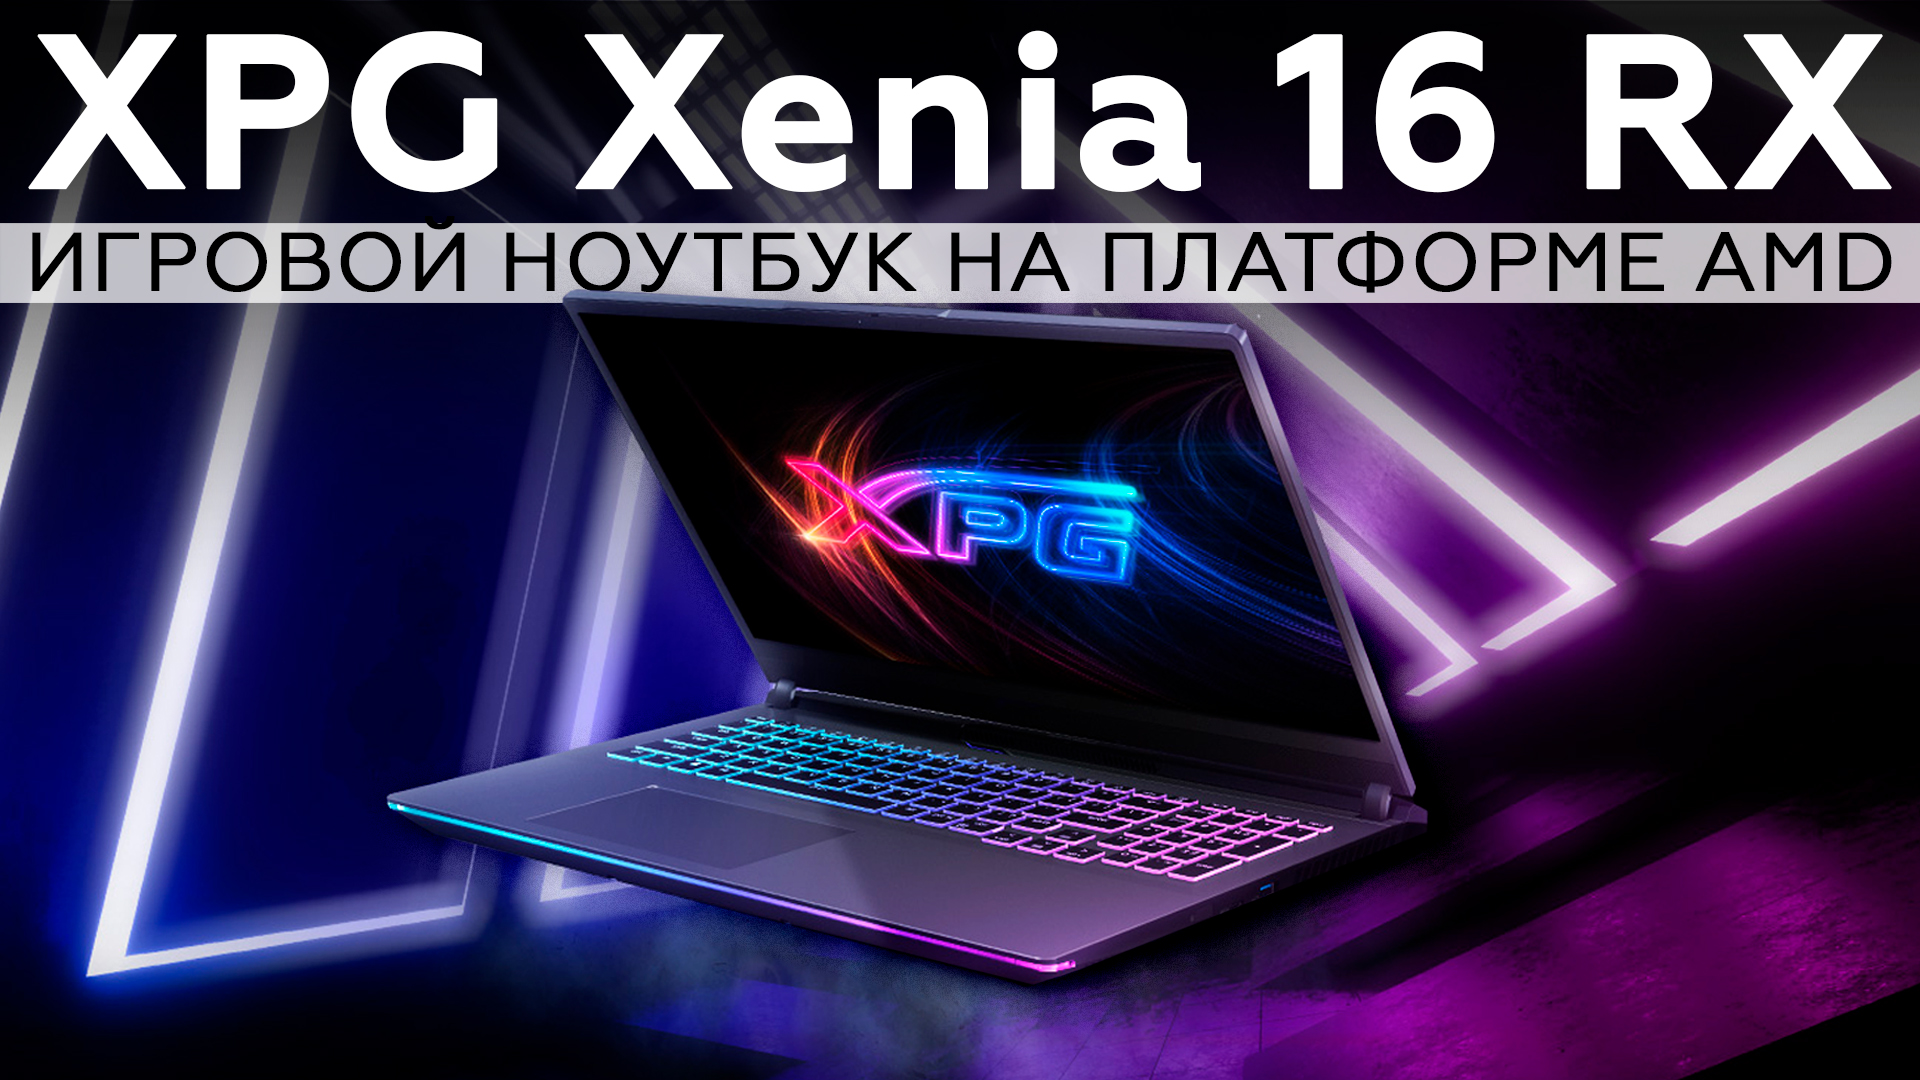 Игровой ноутбук XPG Xenia 16 RX на платформе AMD